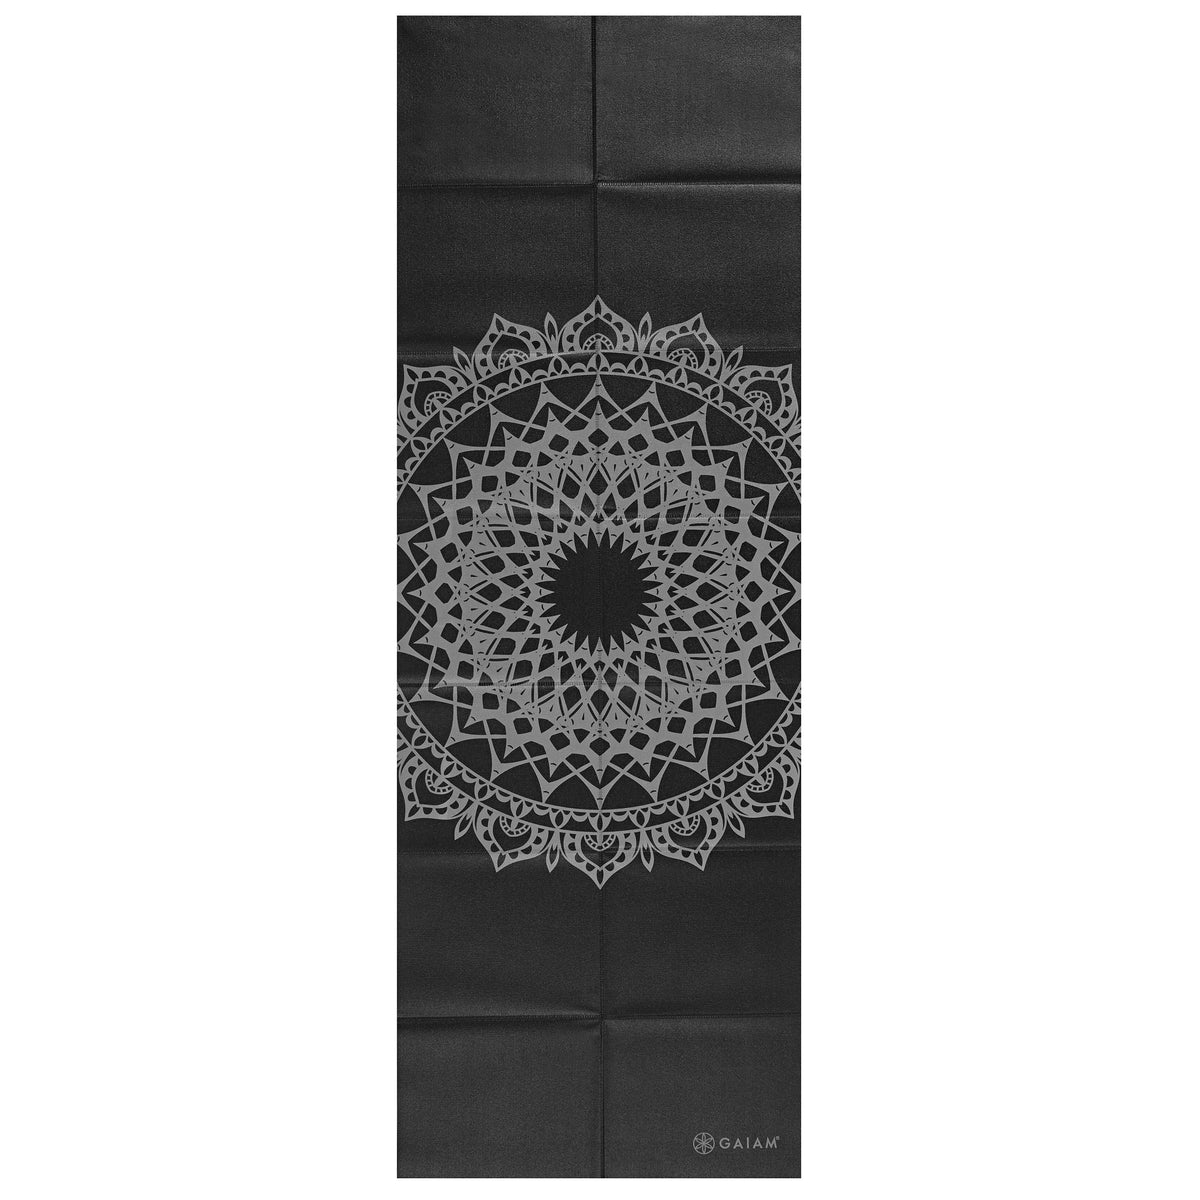 Theyogawarehouse Product Detail: Gaiam Studio Select Dry Grip Travel Yoga  Mat (2mm, Gaiam Mats, gai-ymdgt-2200